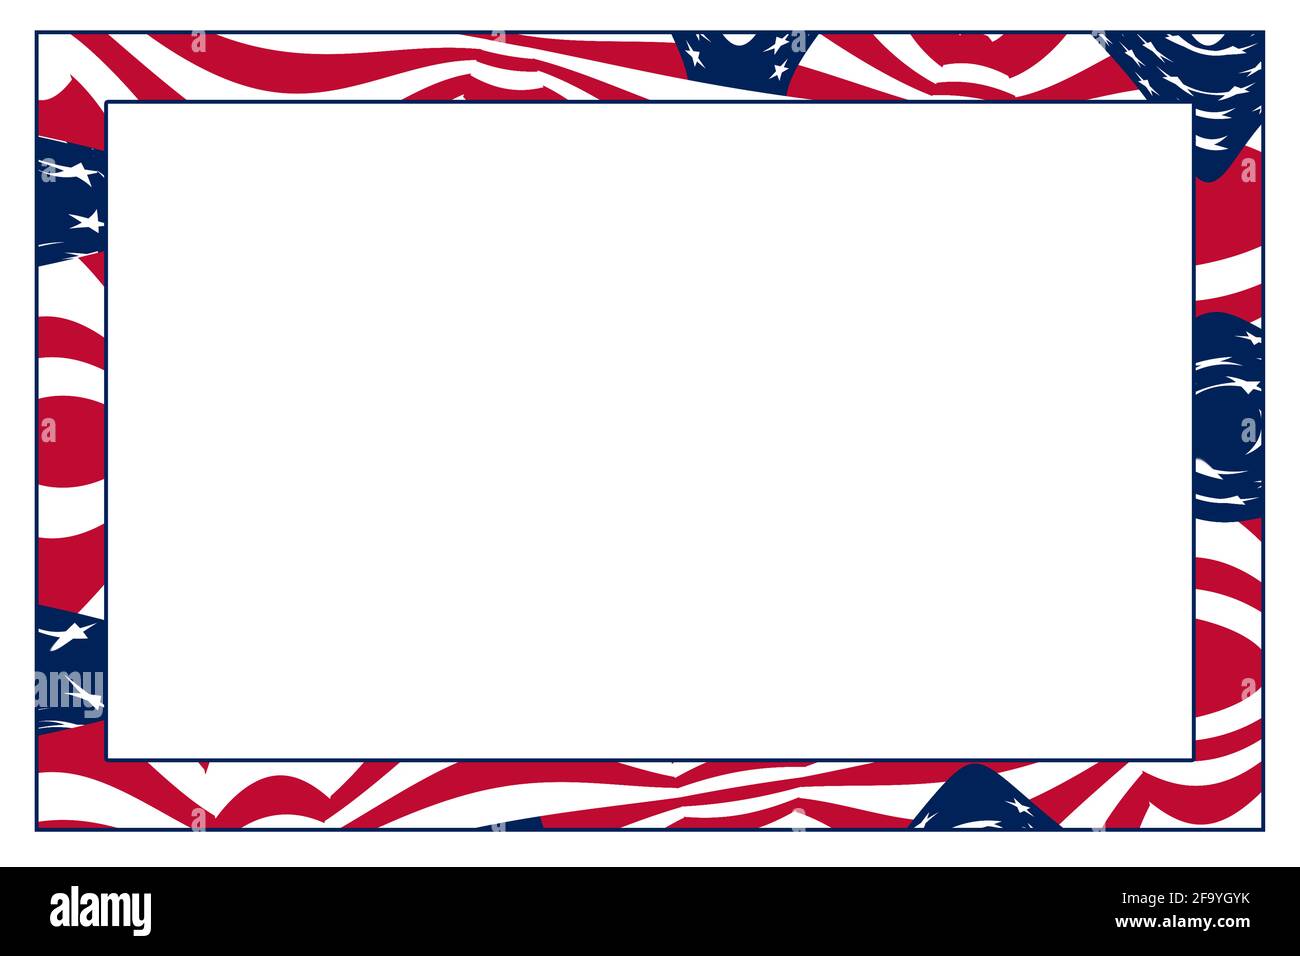 abstract curved shape american flag big border for presentation slide graphics Stock Photo